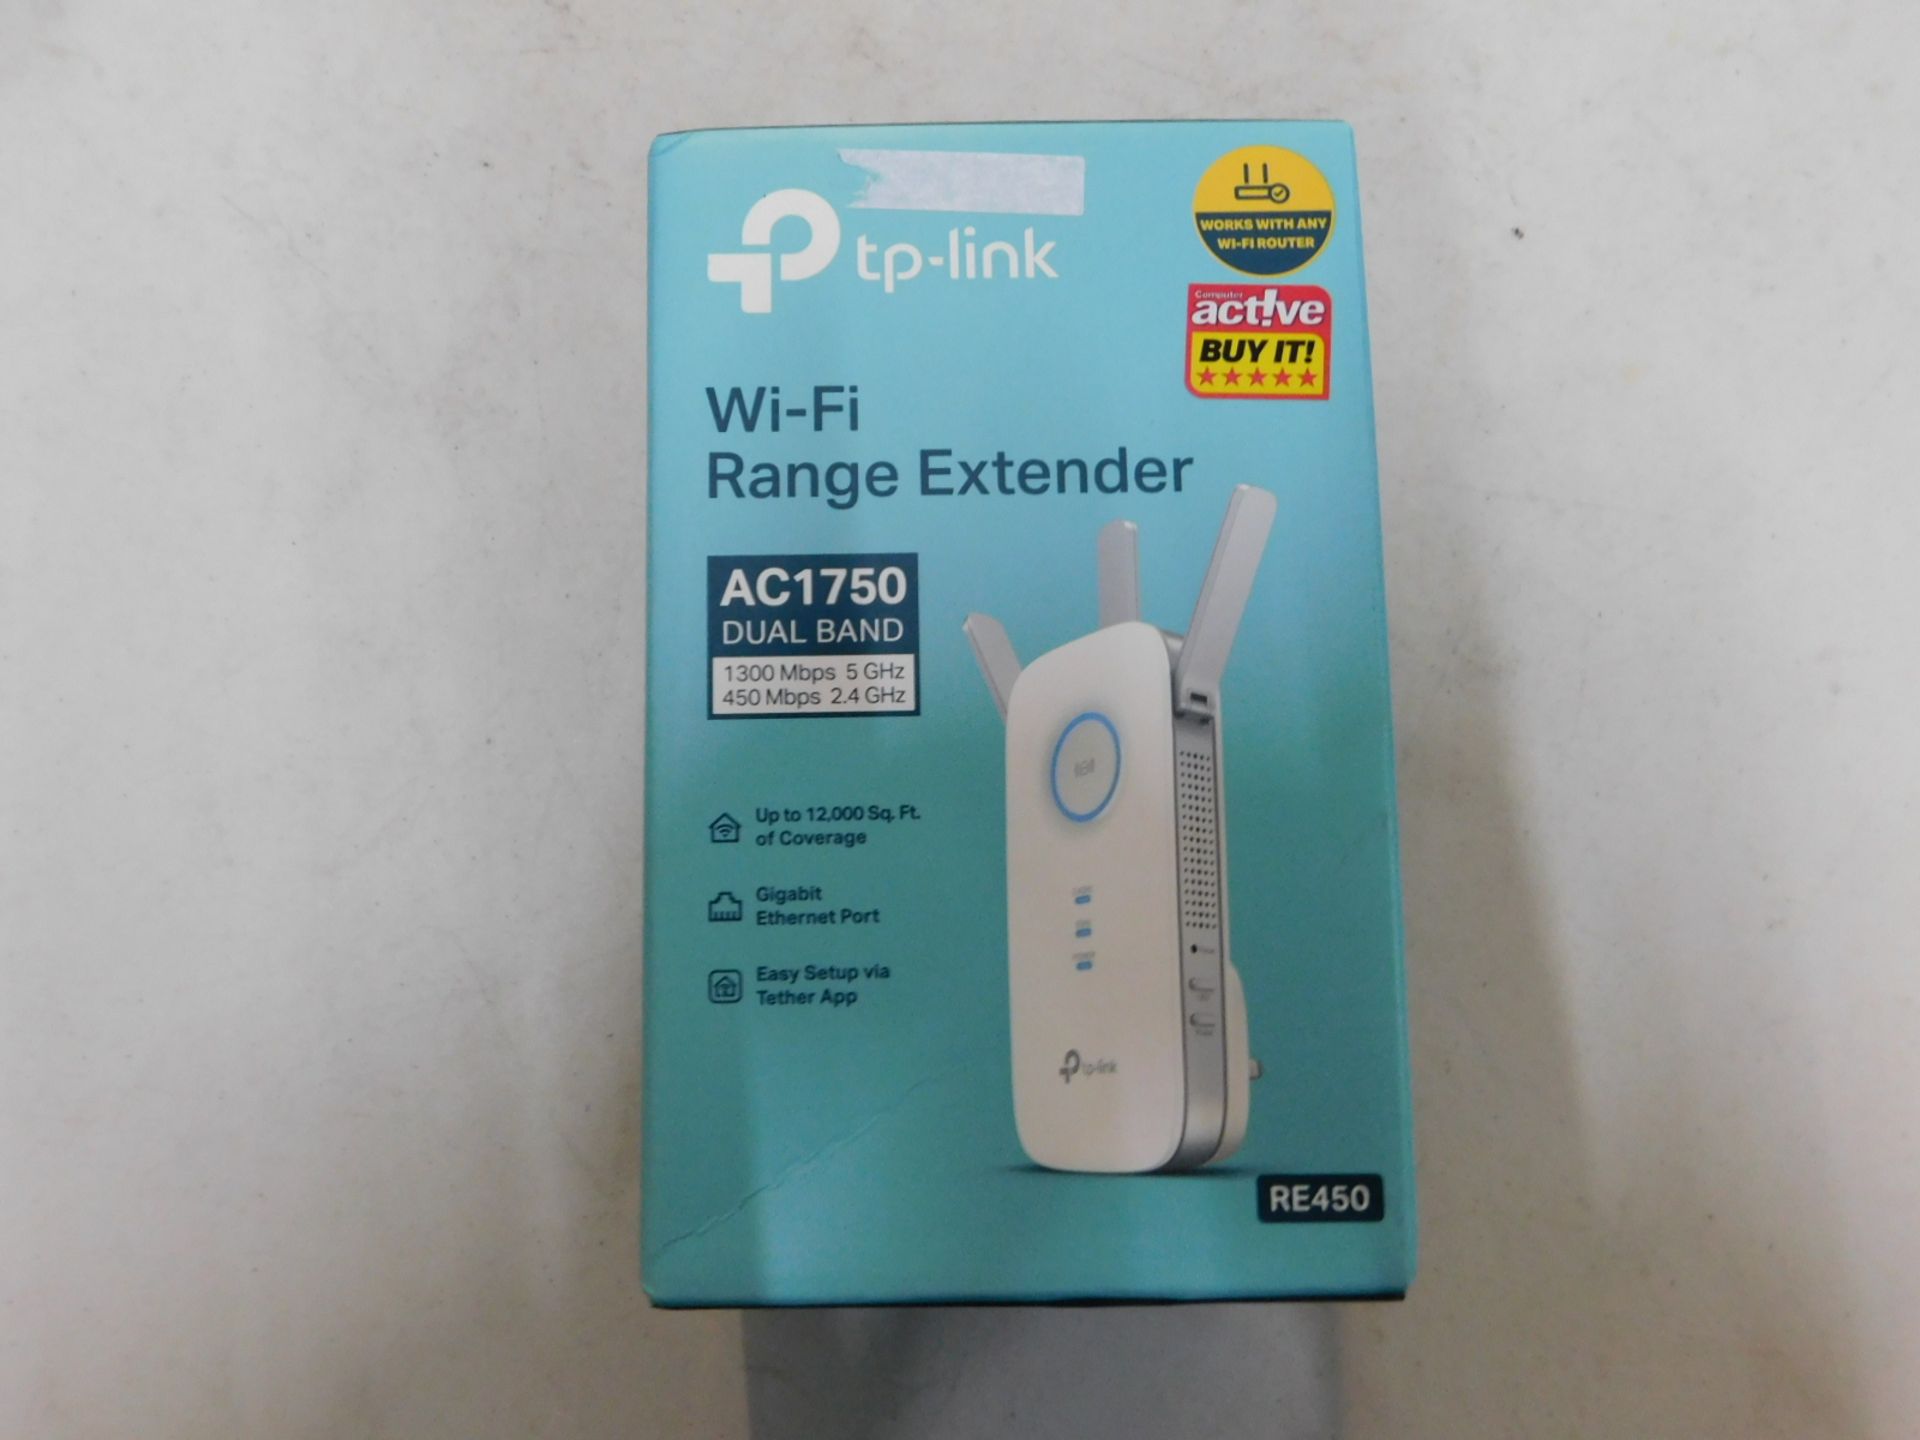 1 BOXED TP-LINK AC1750 WI-FI RANGE EXTENDER UPTO 12.000 SQ FT RRP Â£39.99